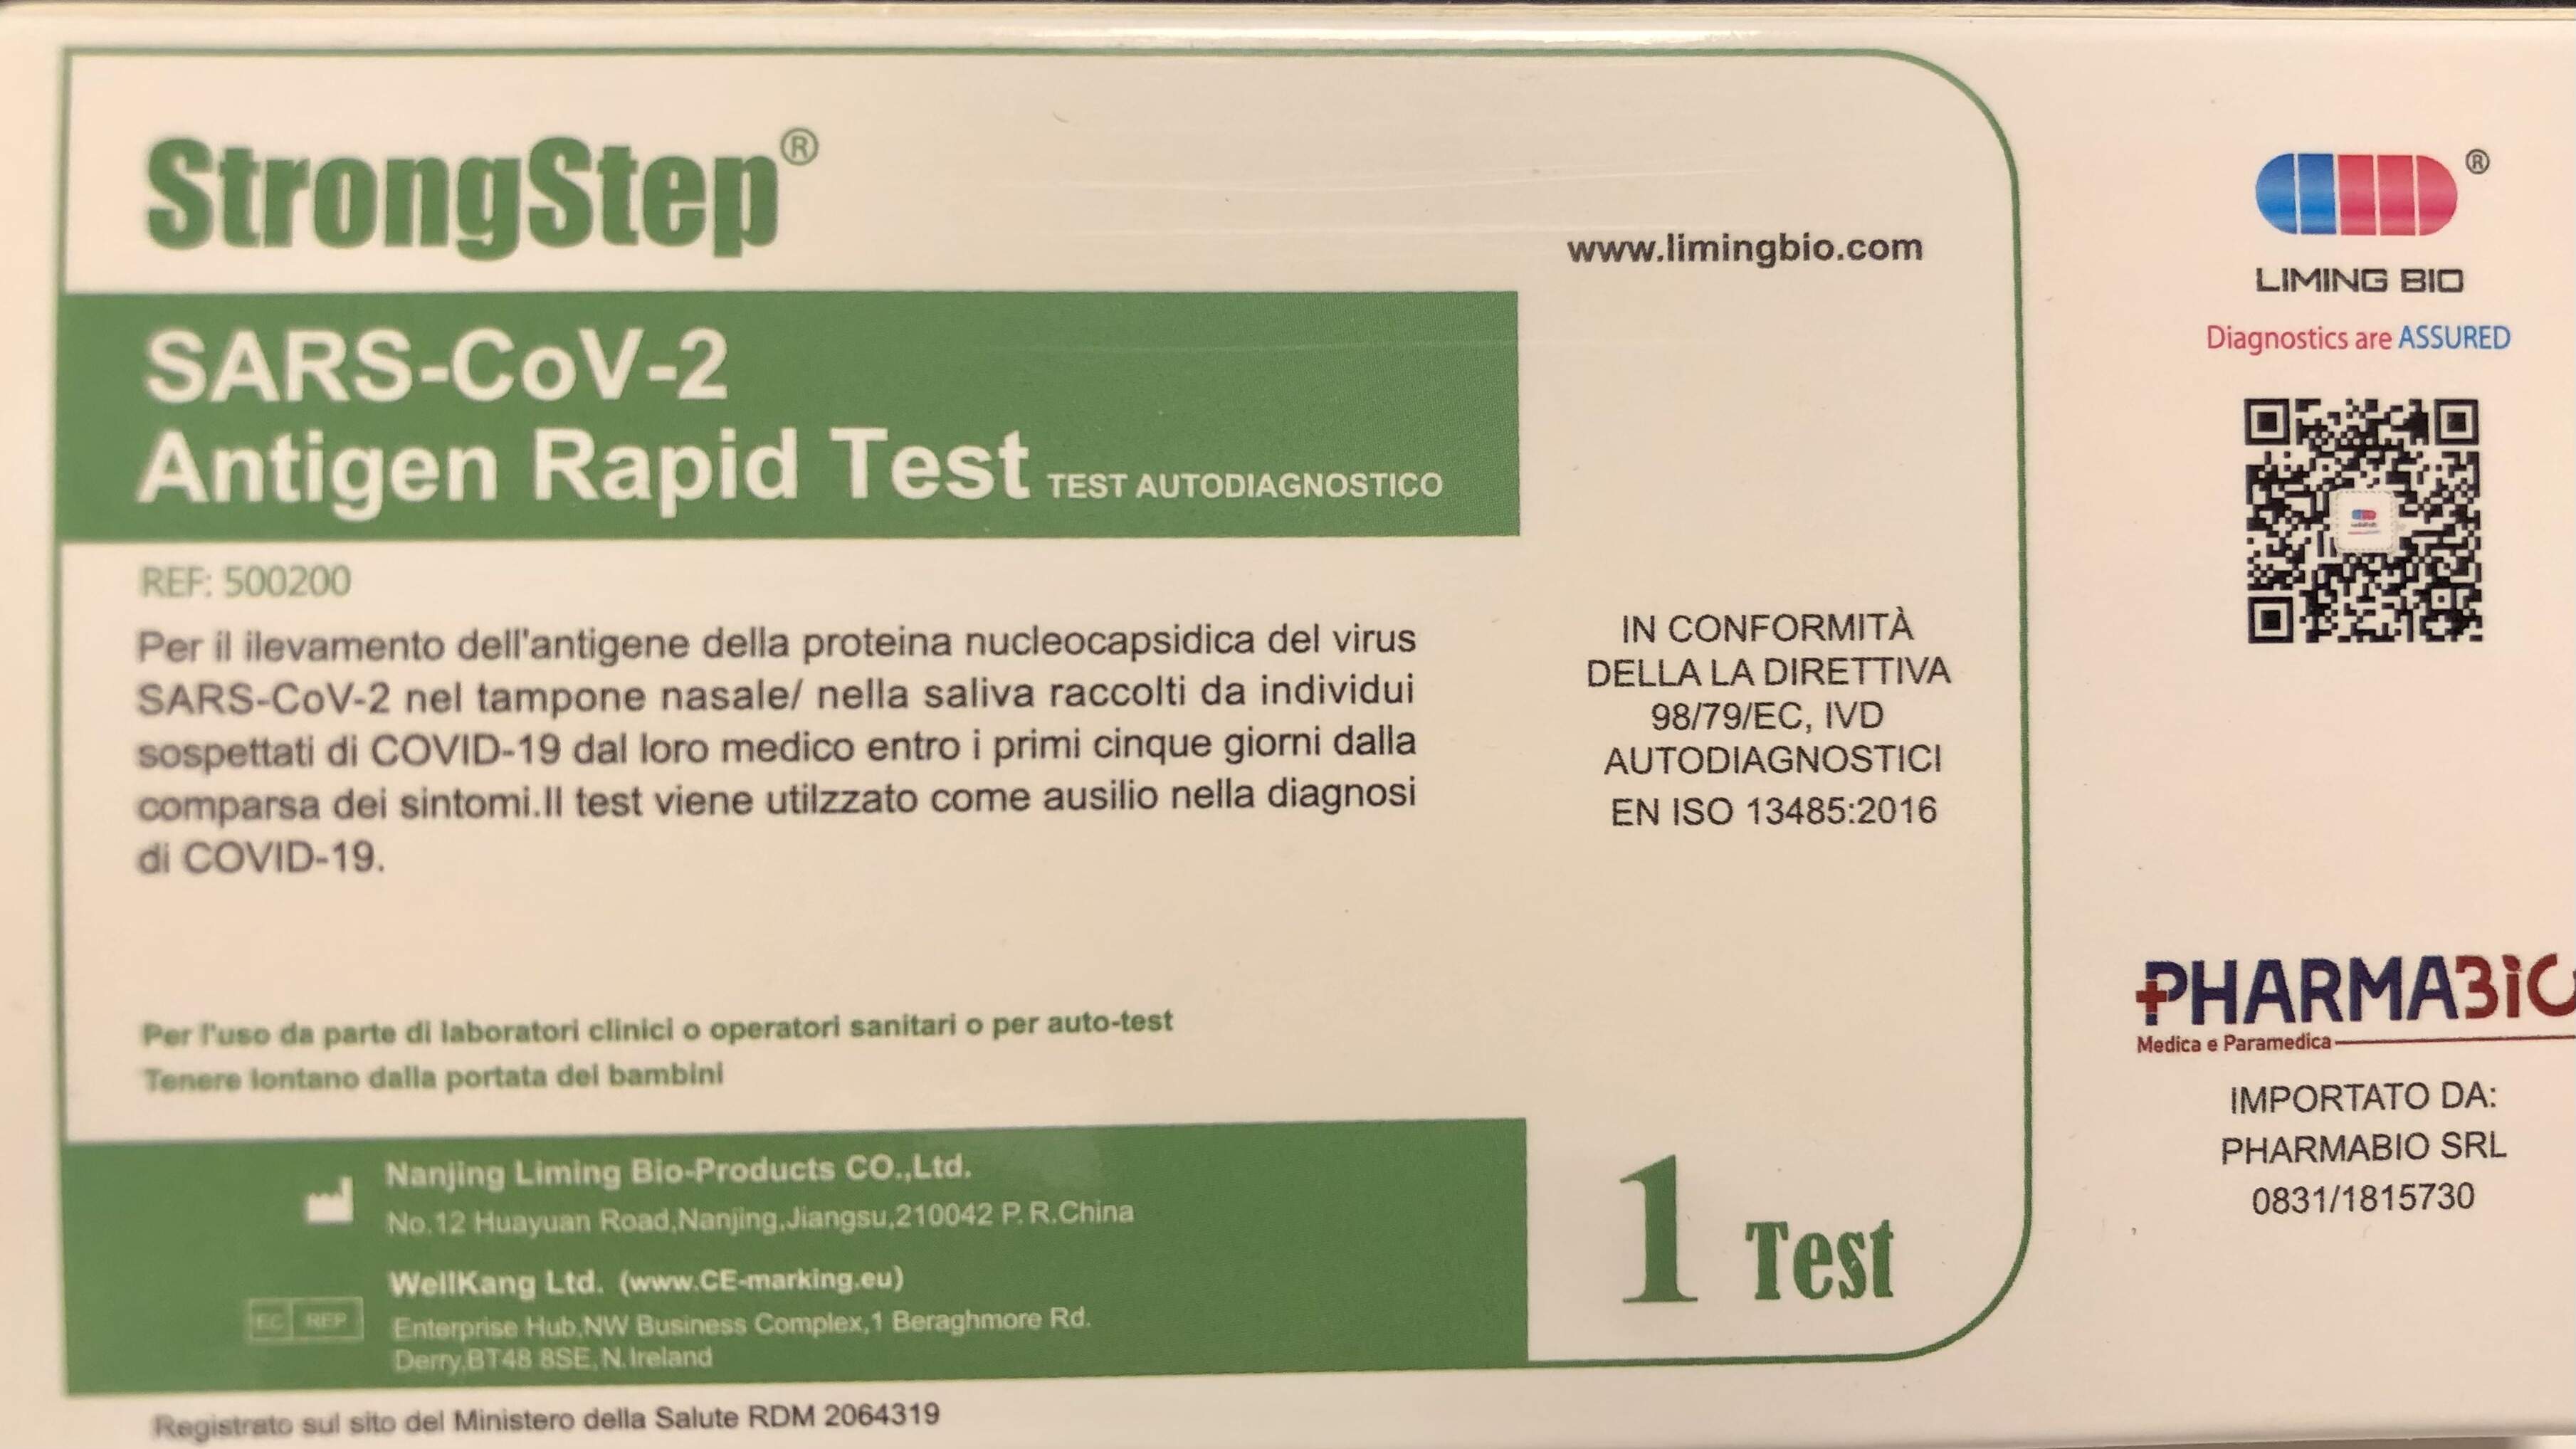 StrongStep Test Covid-19 Test Antigenico Rapido